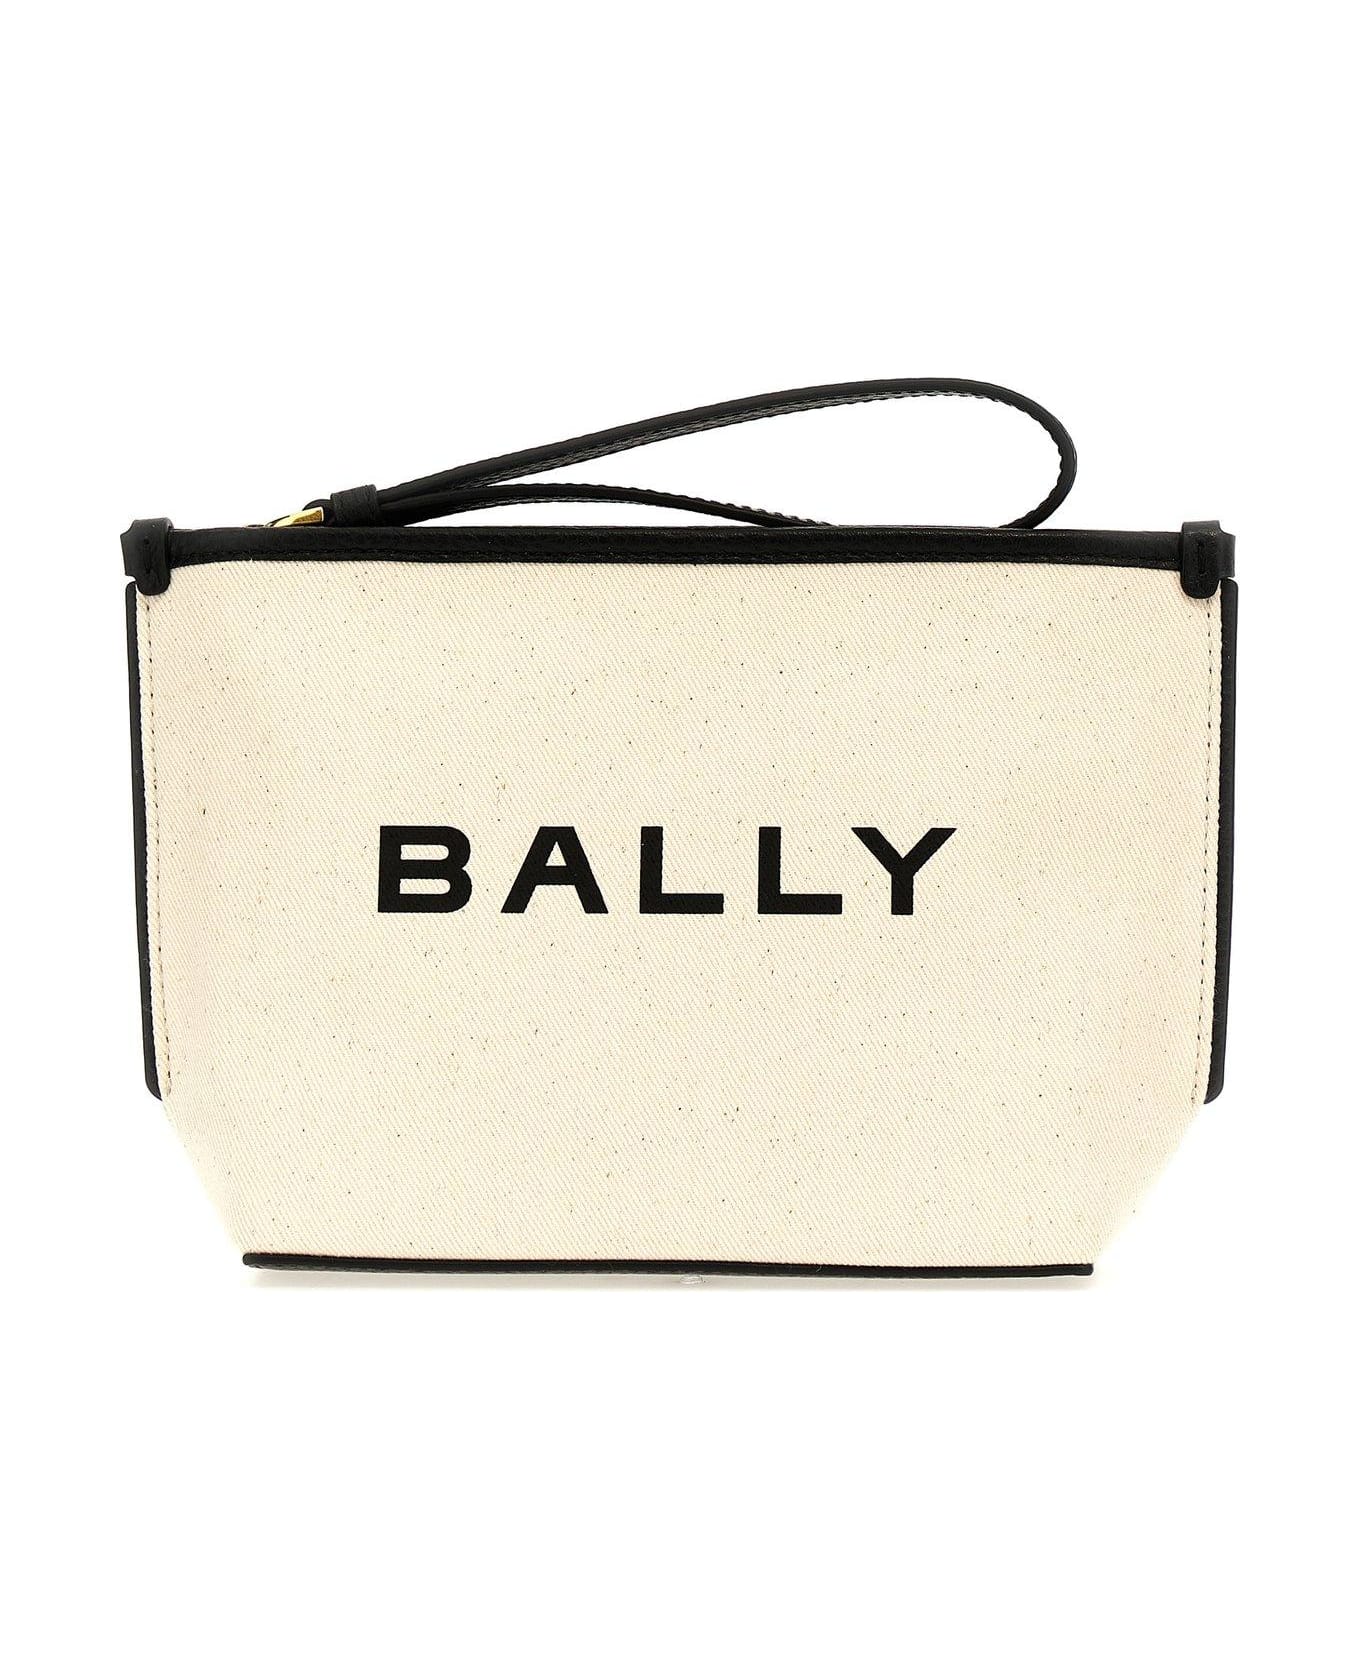 Bally Logo Printed Zipped Clutch Bag - NEUTRALS